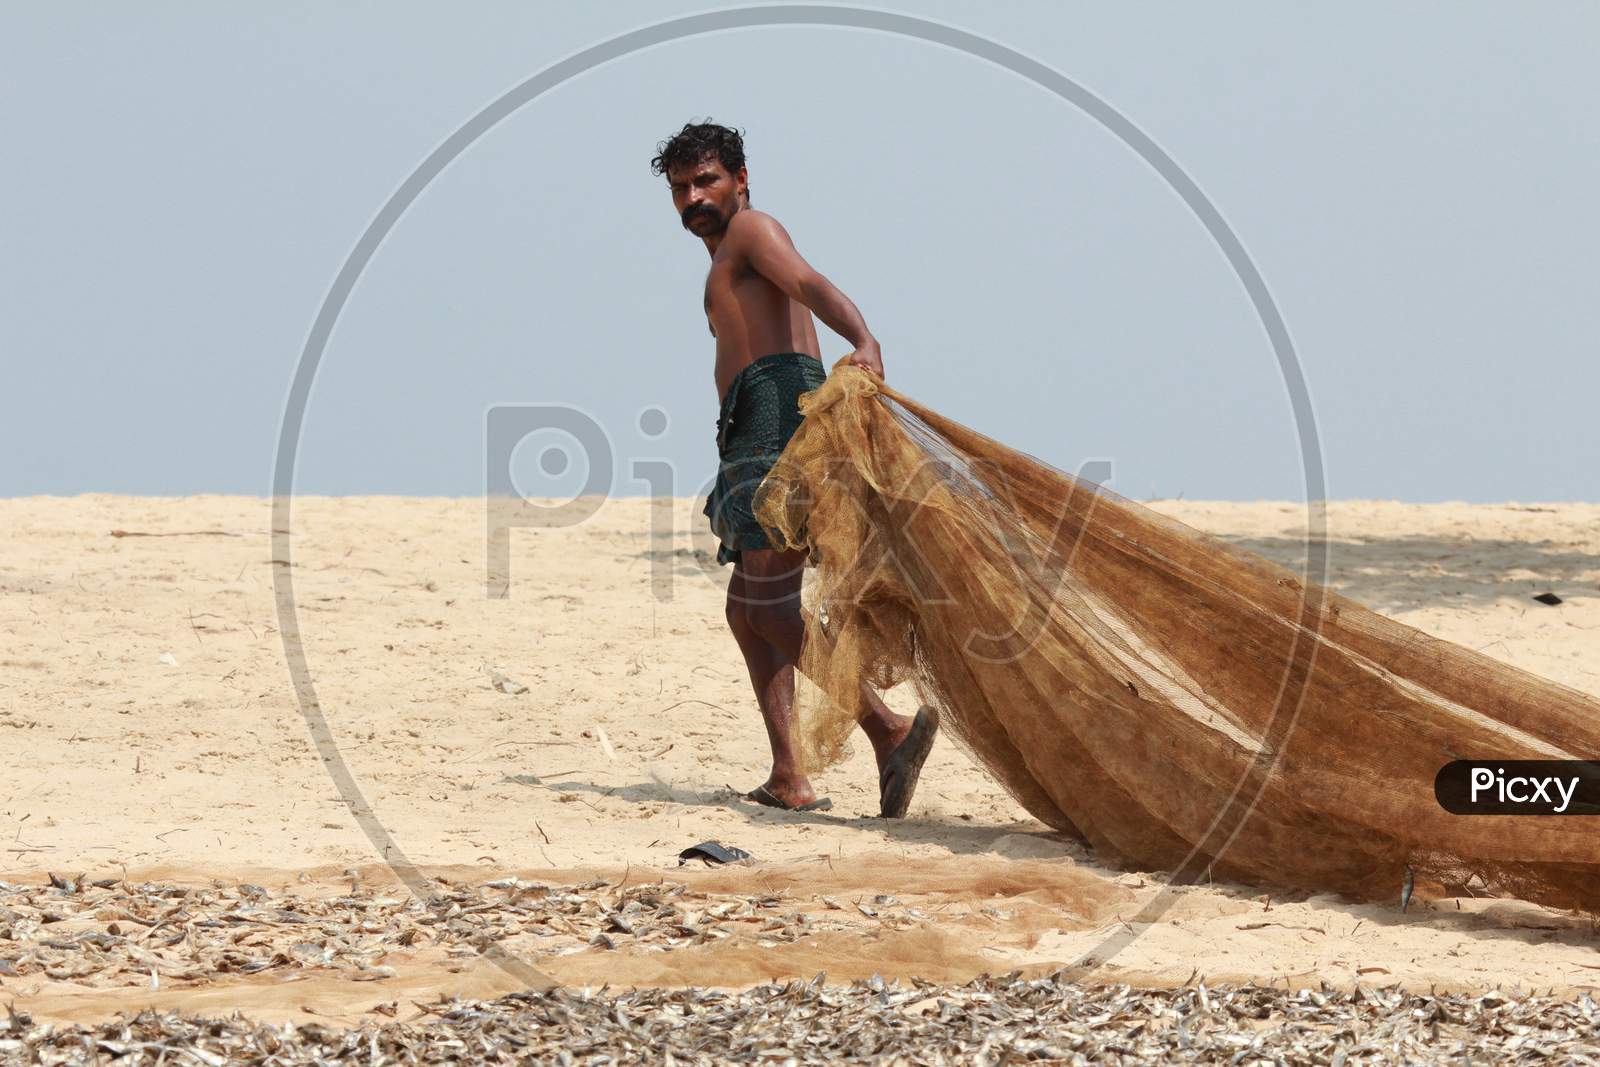 Fishermen in Marari Beach, Kerala